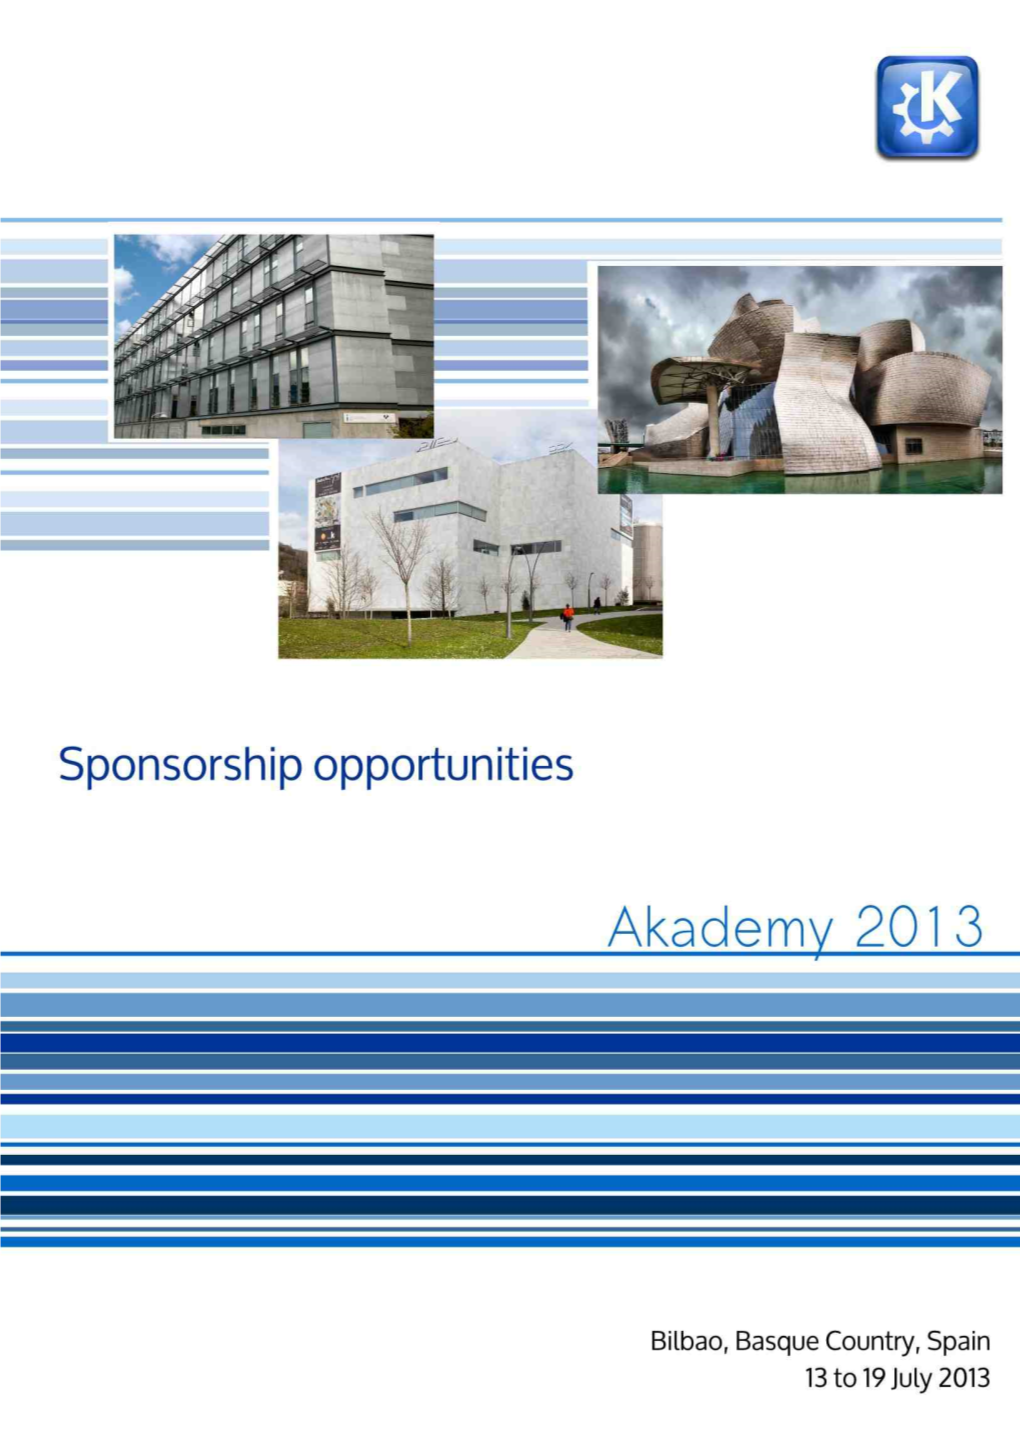 Sponsorship Opportunities Brochure